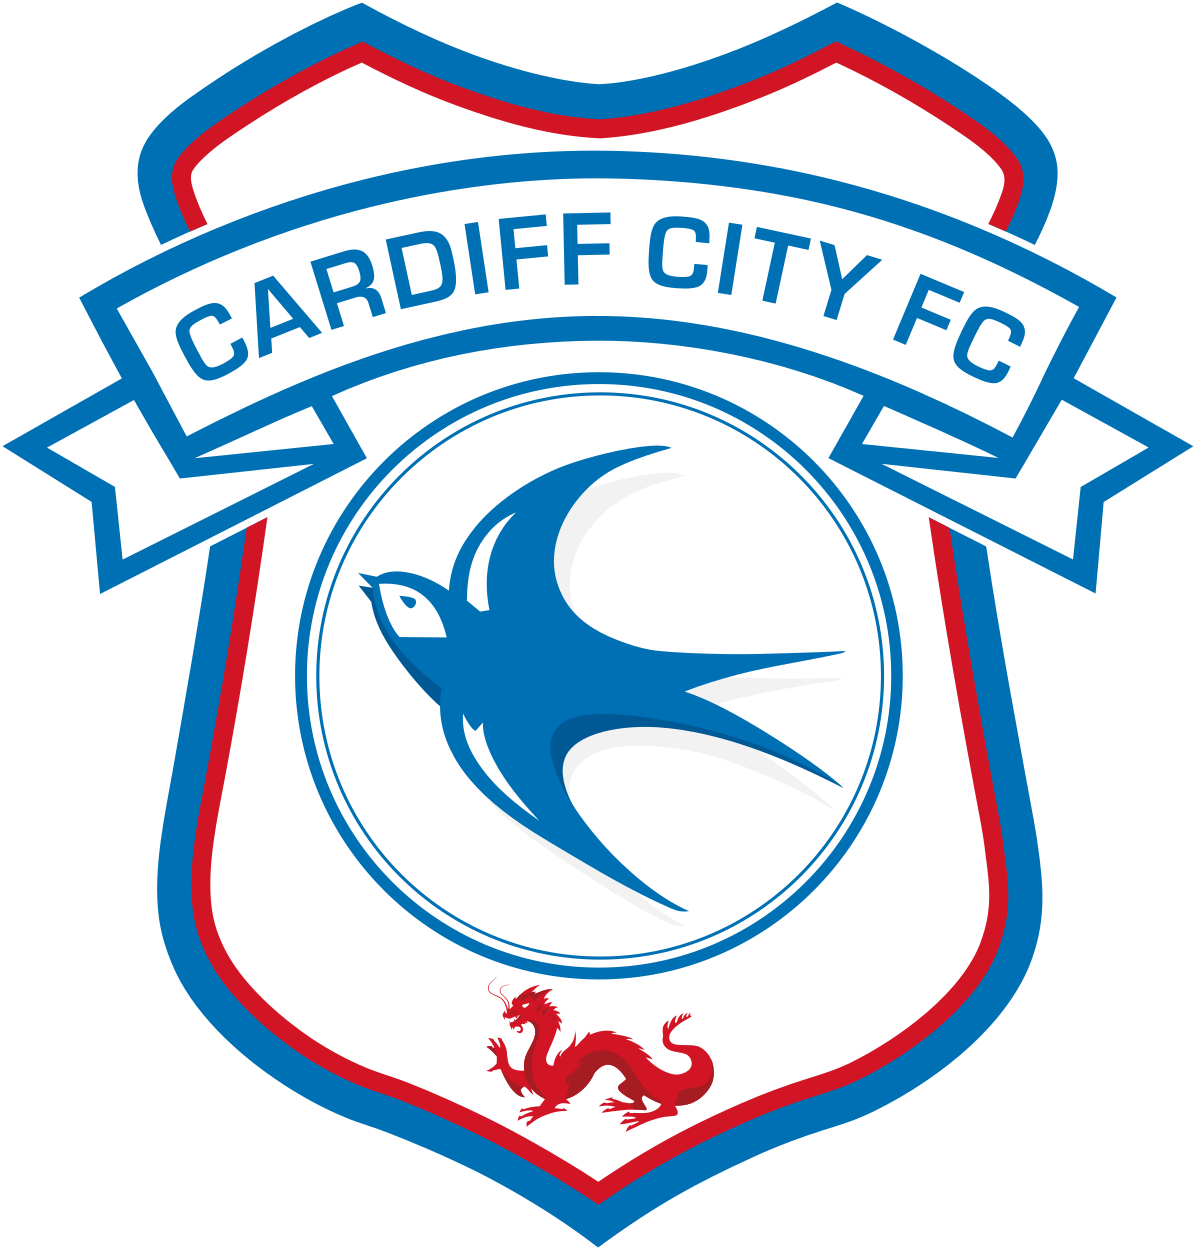 Cardiff City F C logo Imagen PNGn de fondo